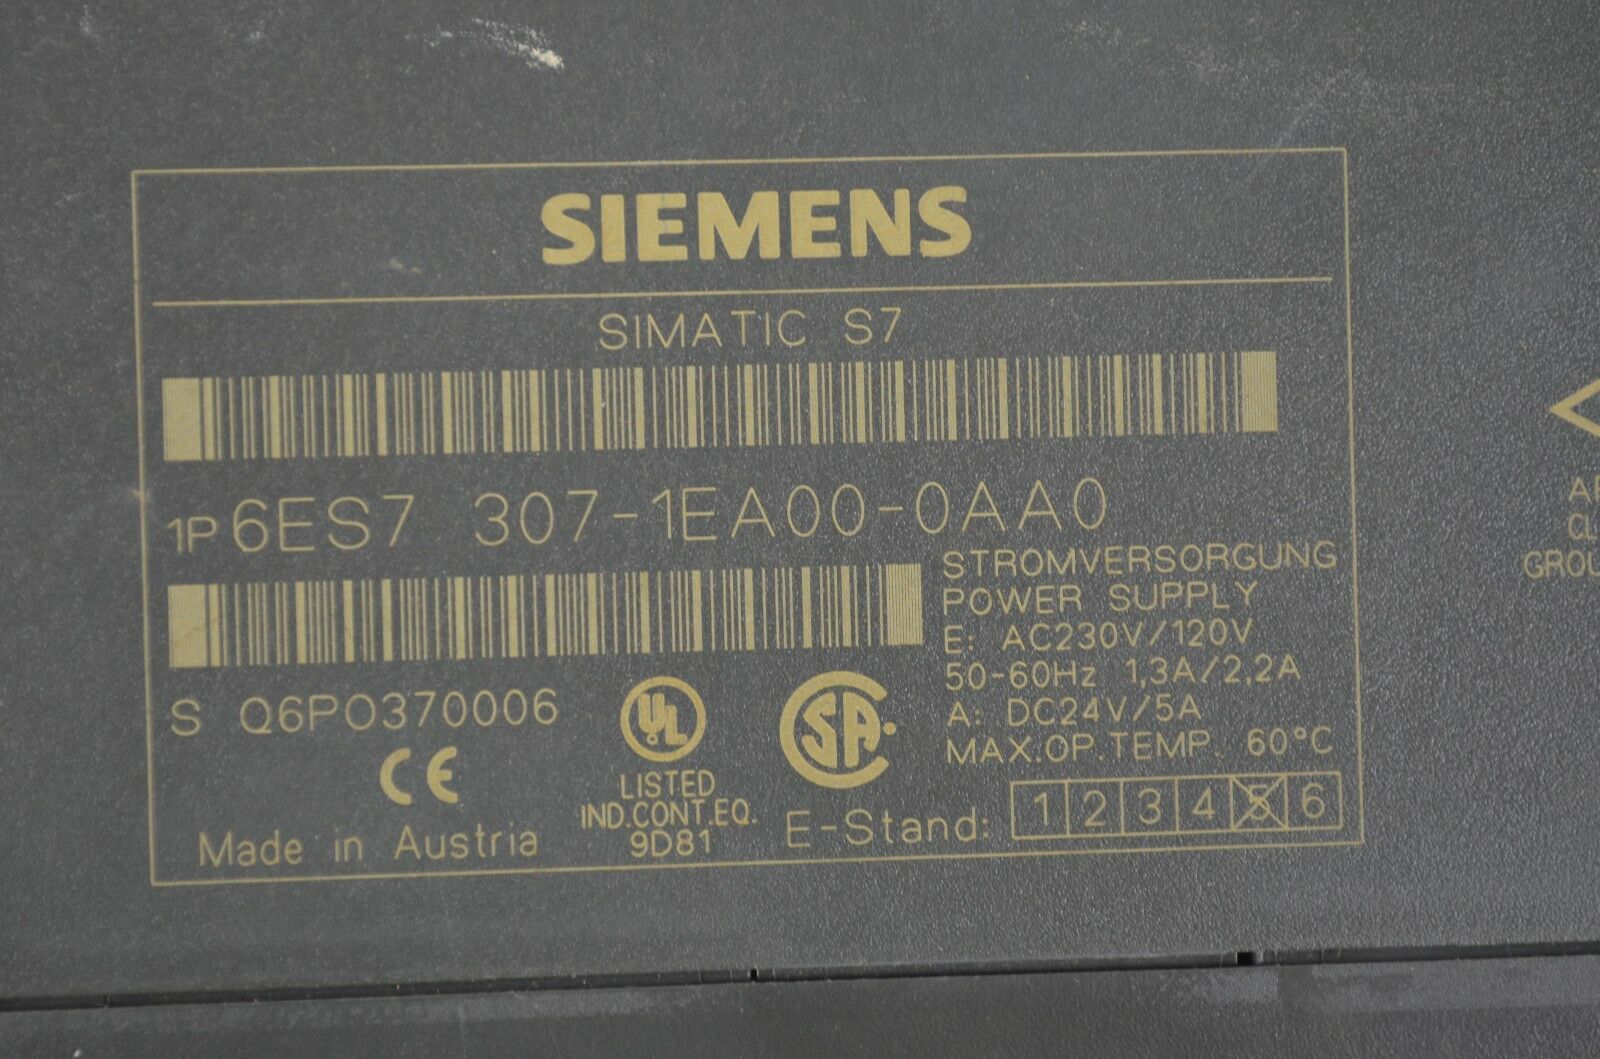 Siemens simatic S7 6ES7 307-1EA00-0AA0 ( 6ES7307-1EA00-0AA0 ) E5 